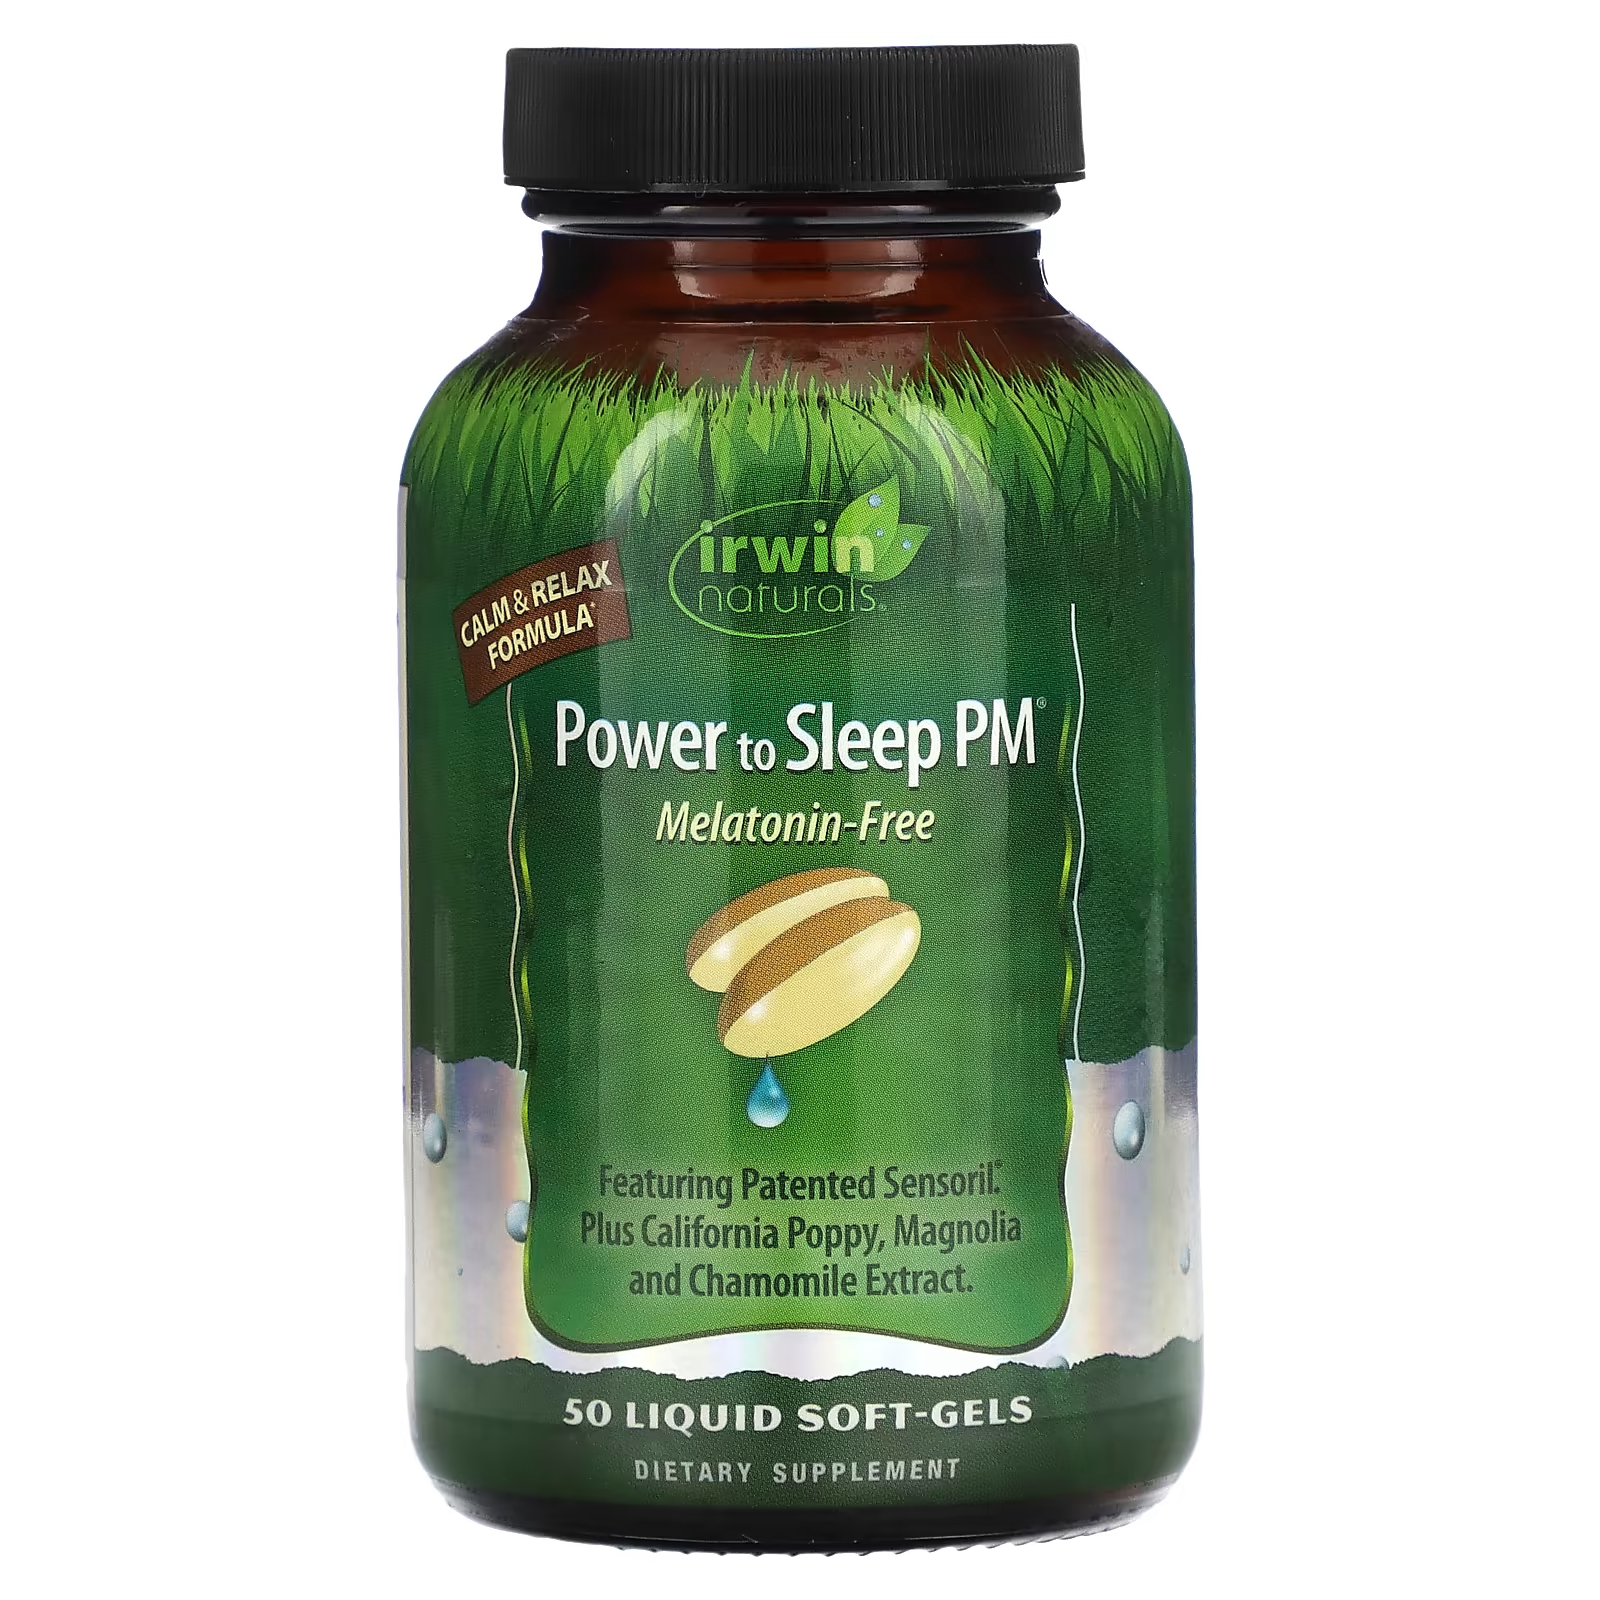 Пищевая добавка Irwin Naturals Power to Sleep PM, 50 мягких капсул с жидкостью пищевая добавка irwin naturals power to sleep pm 50 мягких капсул с жидкостью